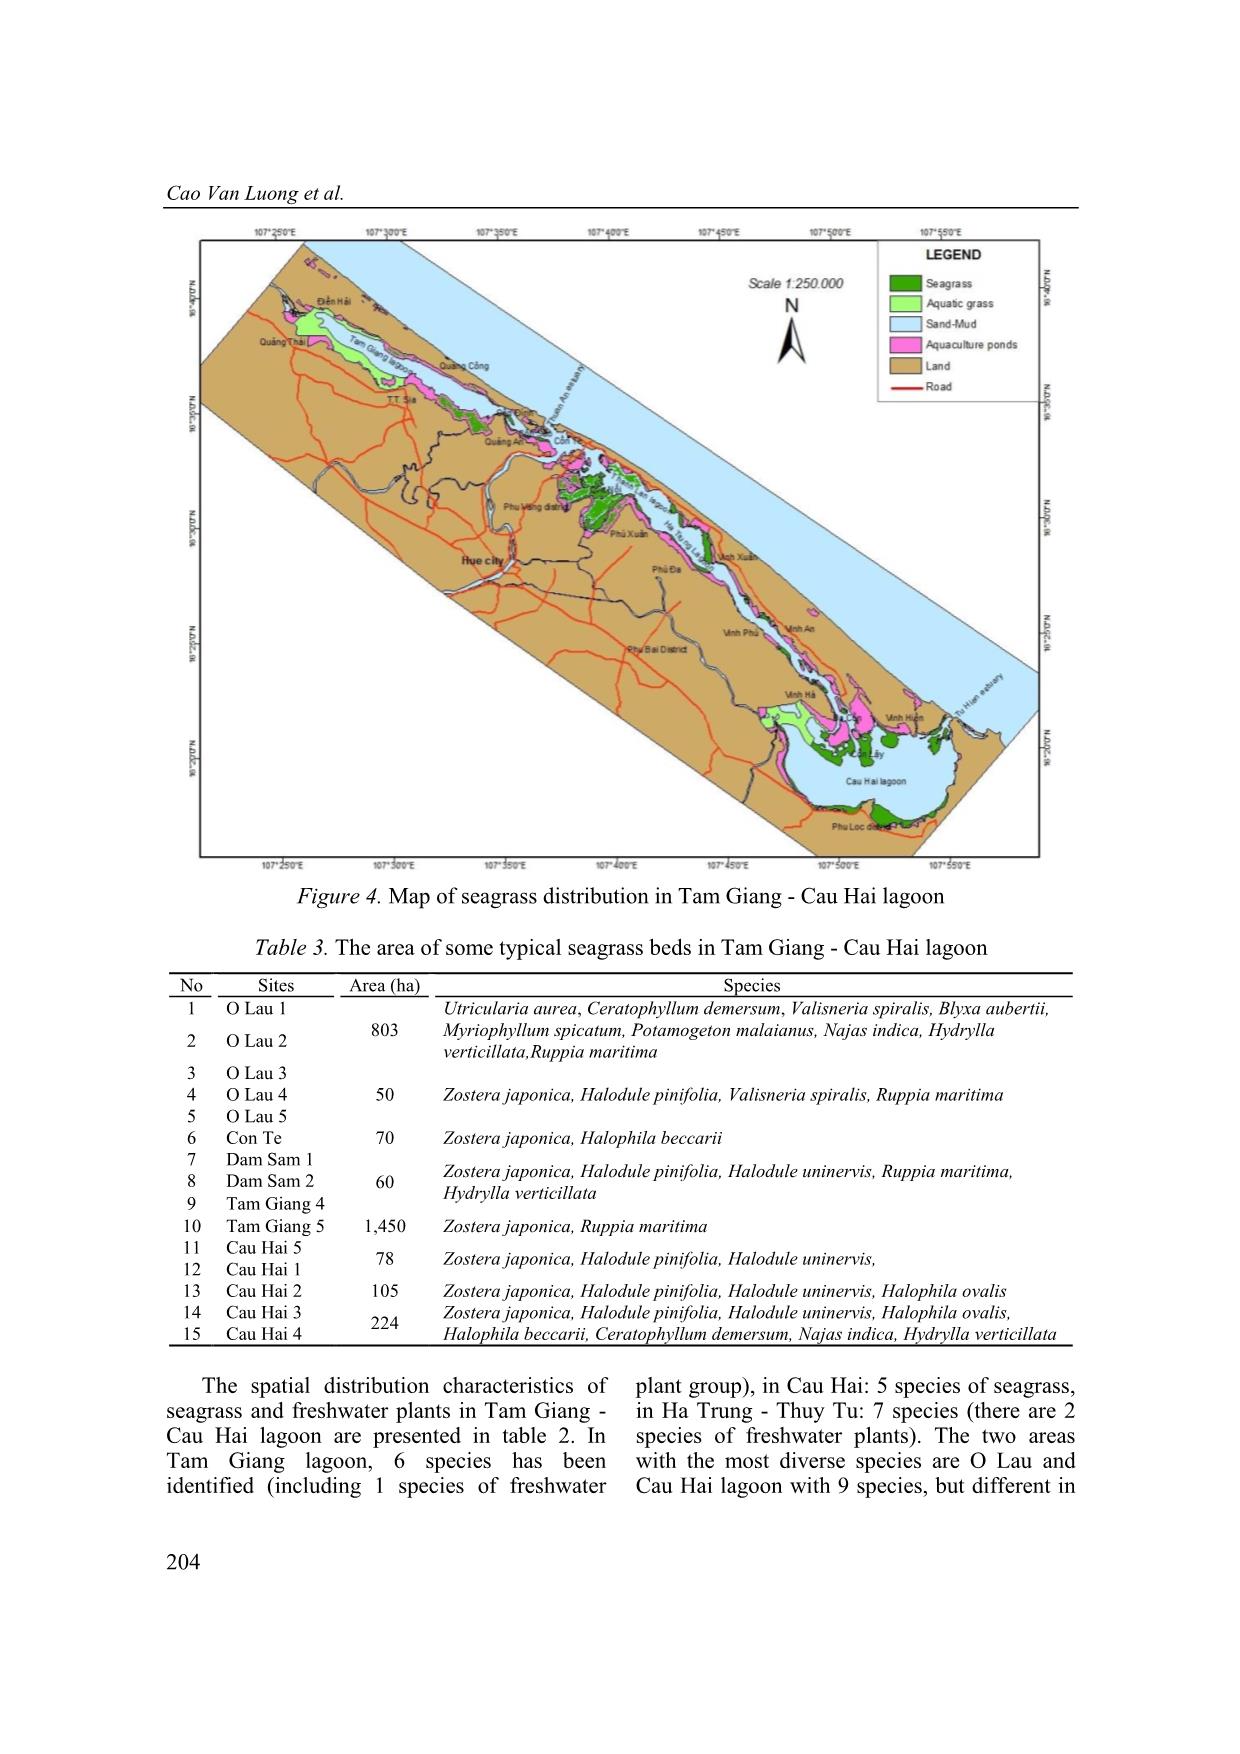 Hydrophyte communities in the Tam Giang - Cau Hai lagoon trang 6